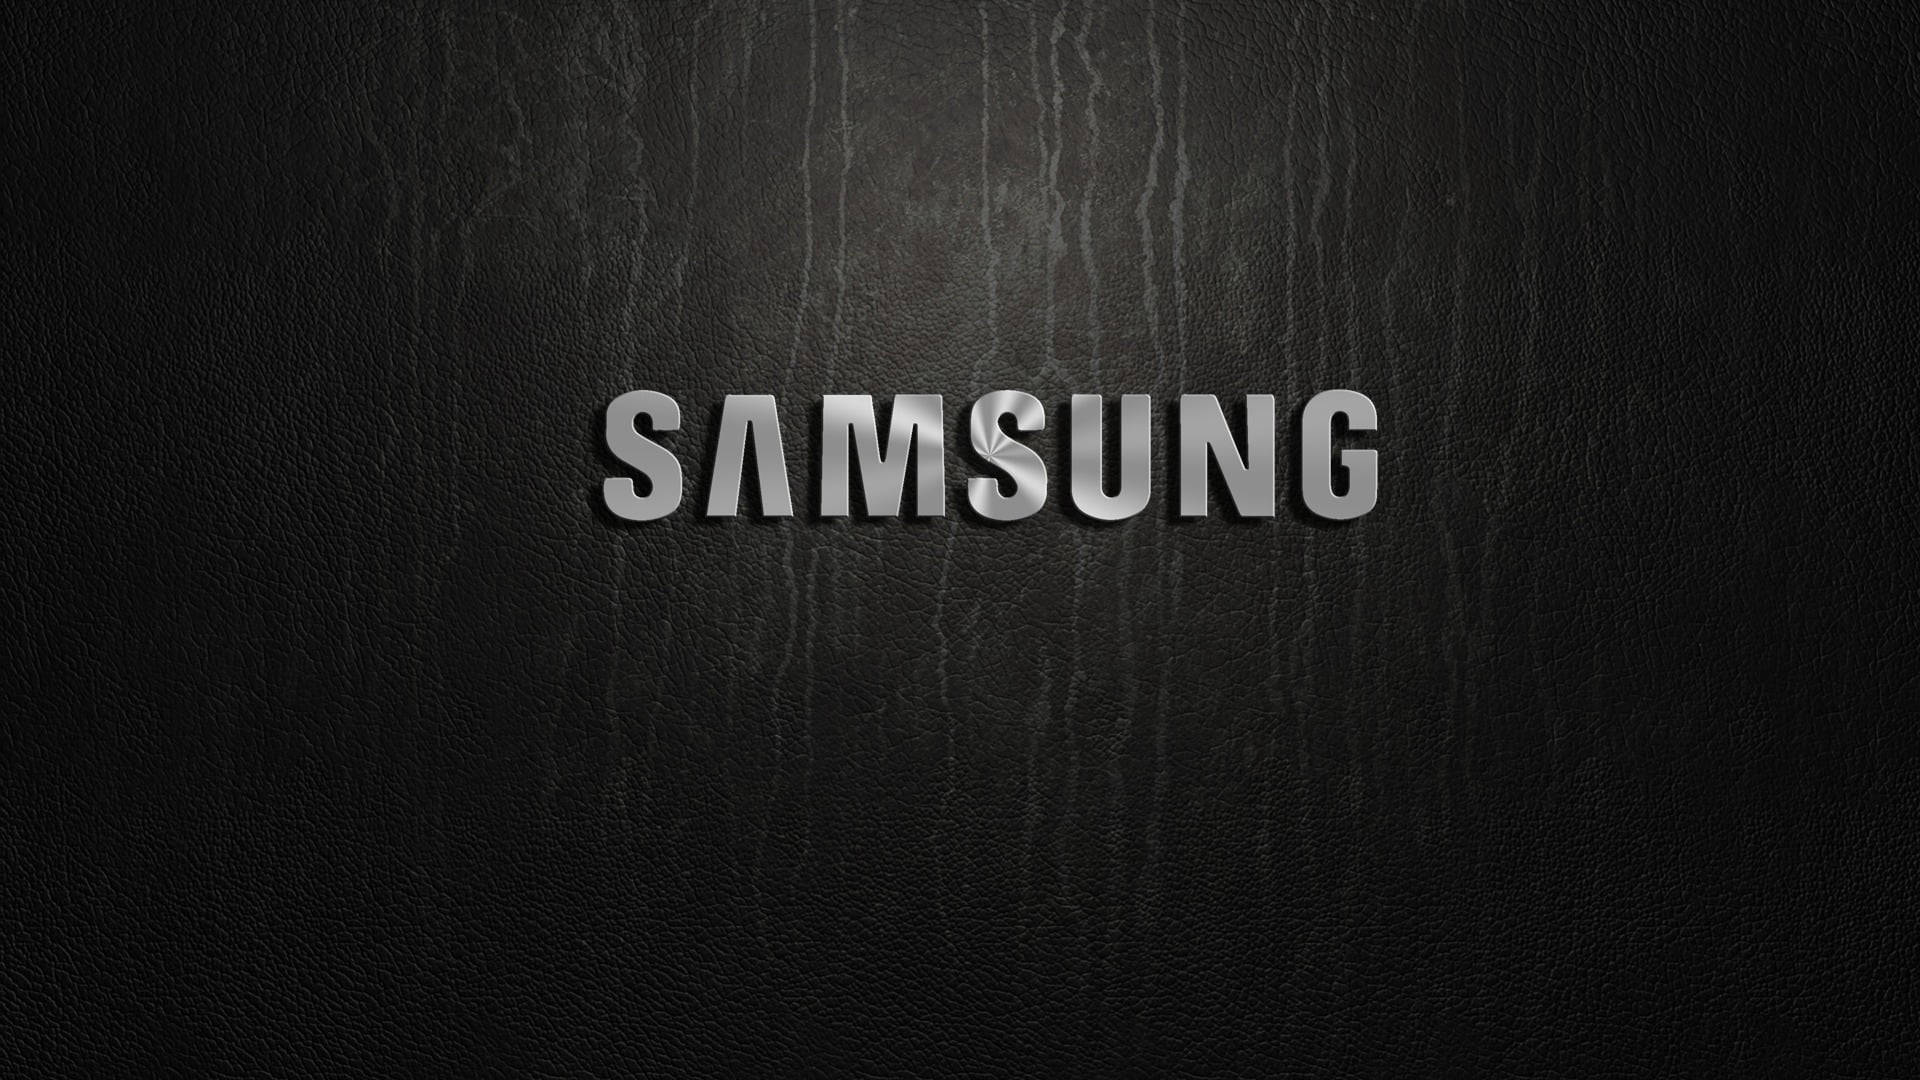 Free Samsung Black Wallpaper Downloads, [100+] Samsung Black Wallpapers for  FREE 